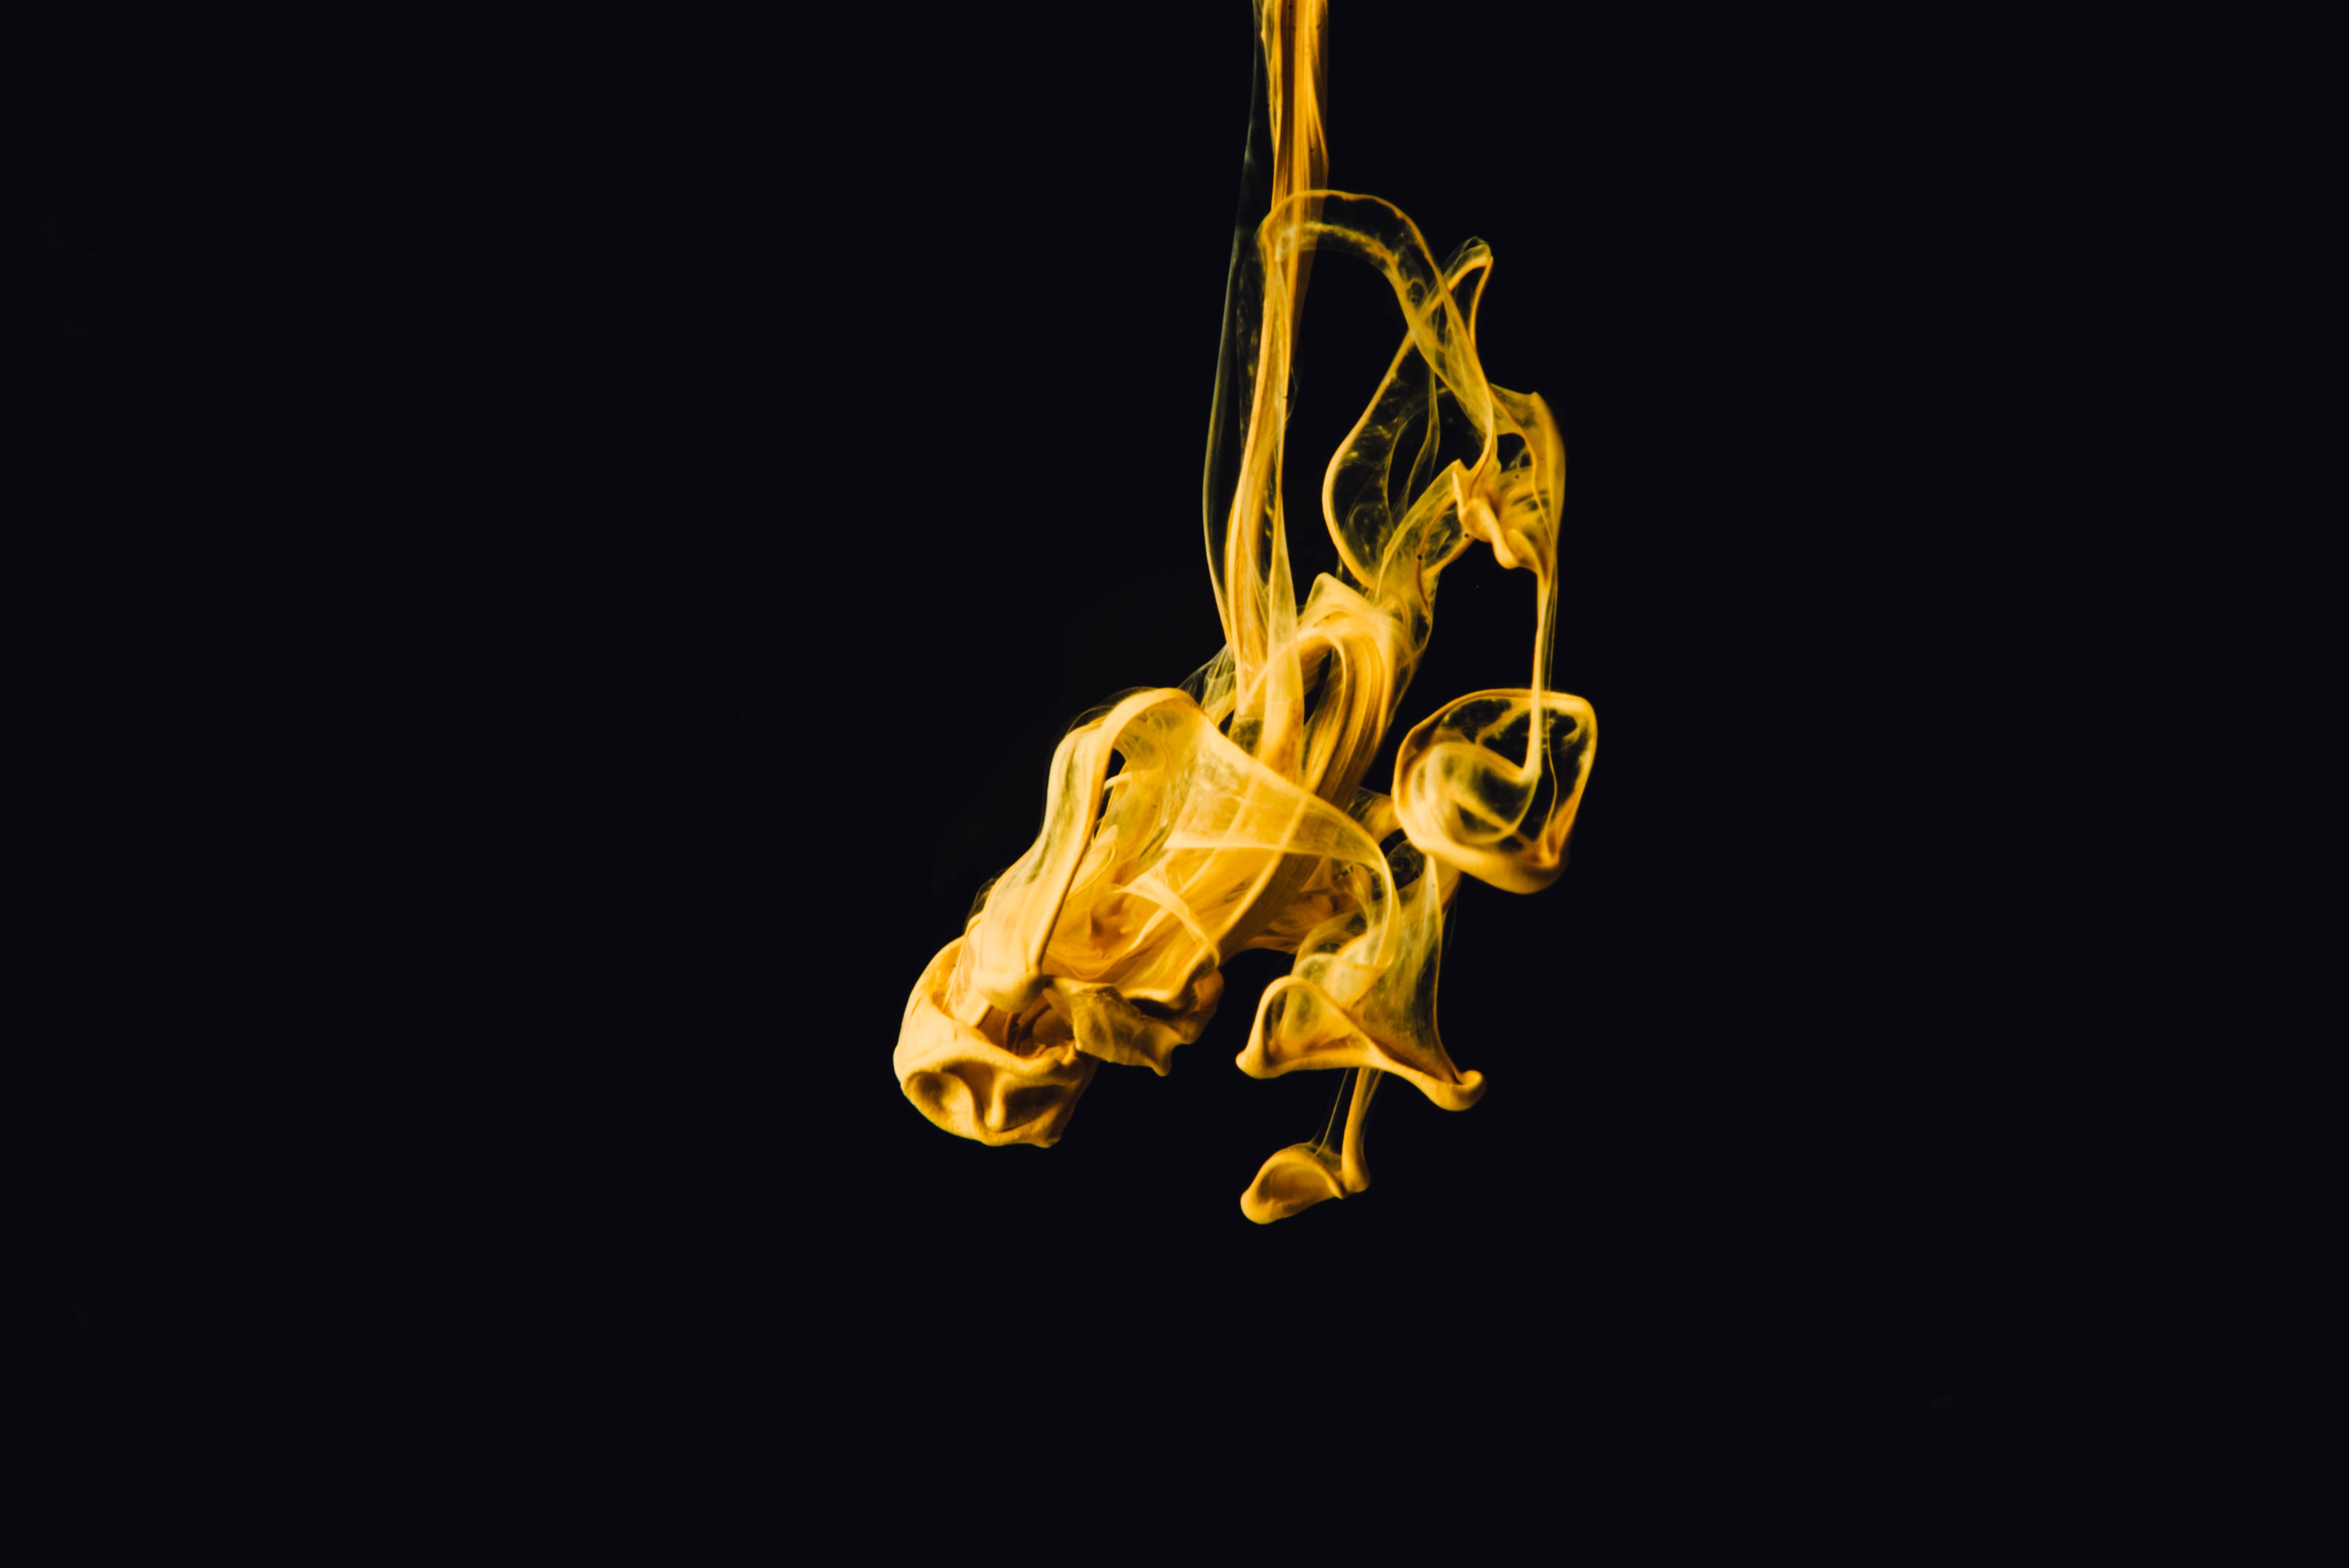 clots, abstract, smoke, plexus